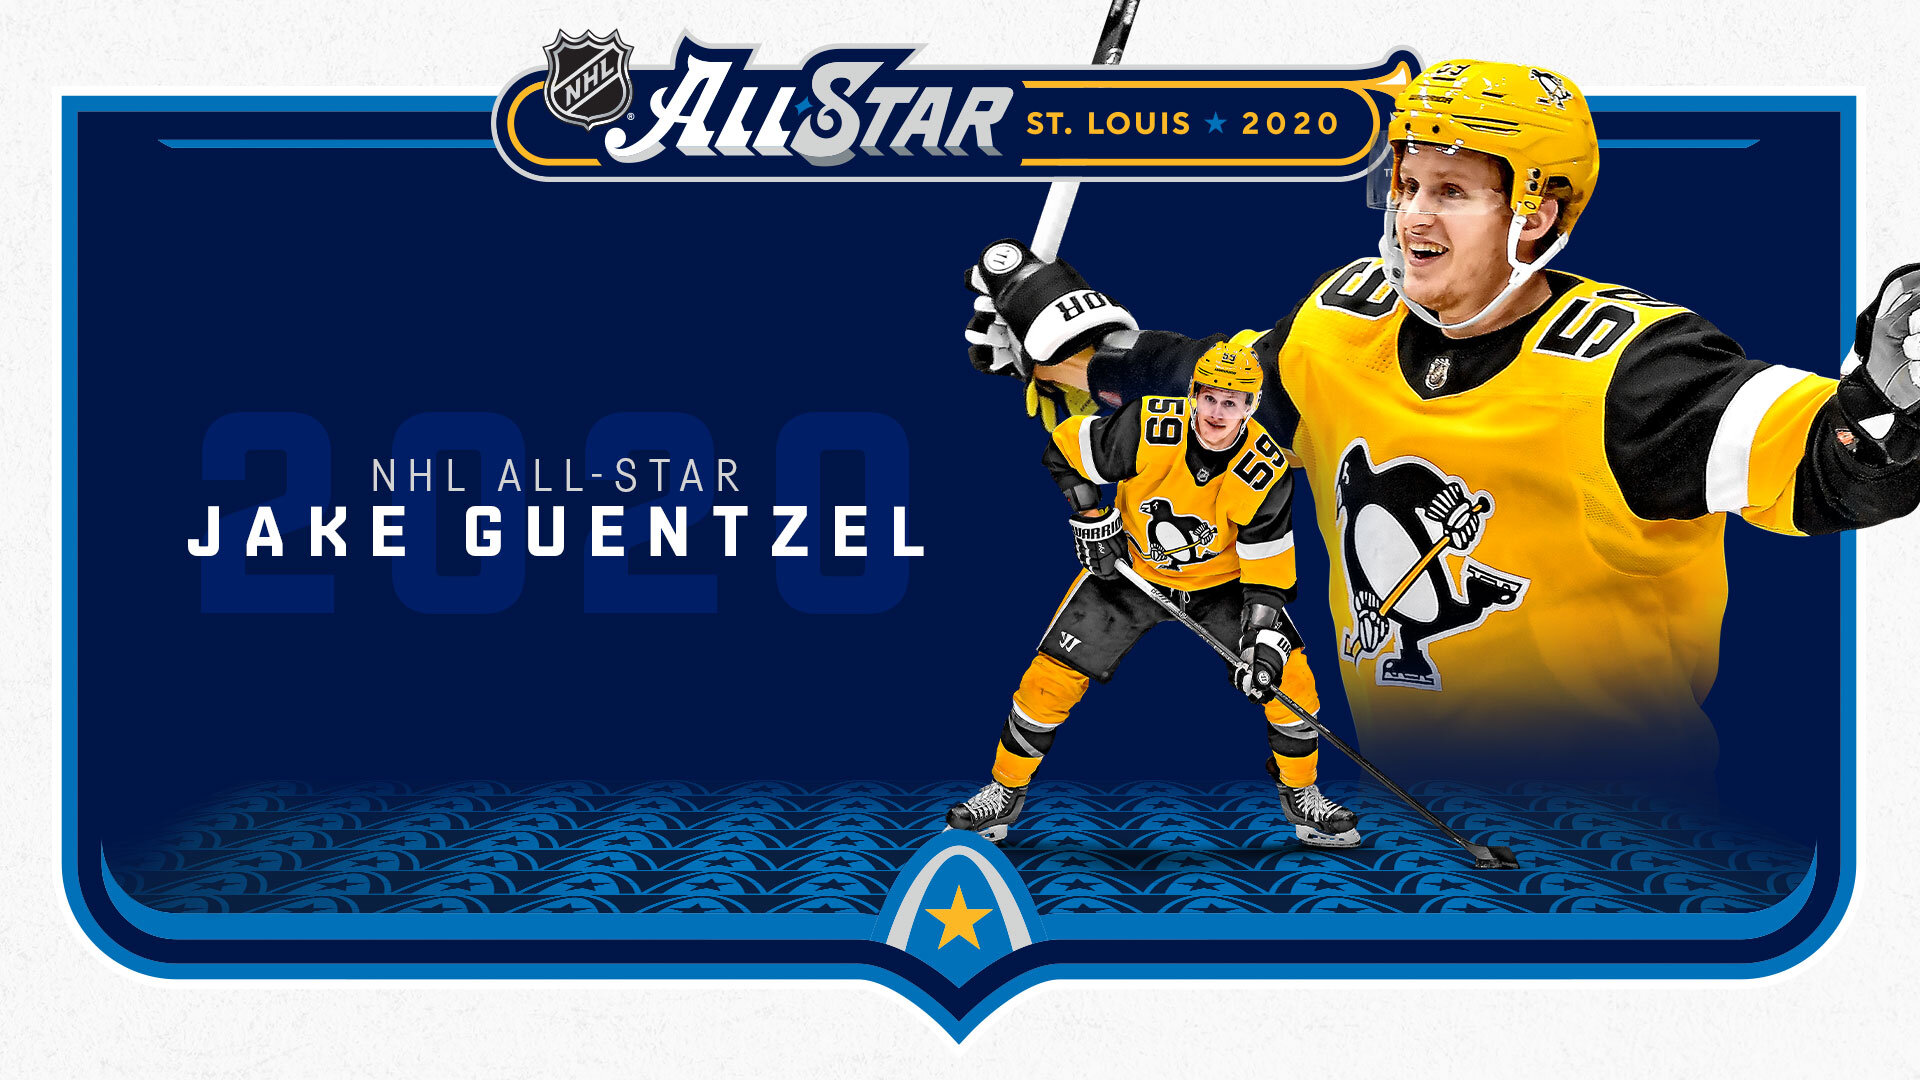 Jake Guentzel 2020 All-Star Selection